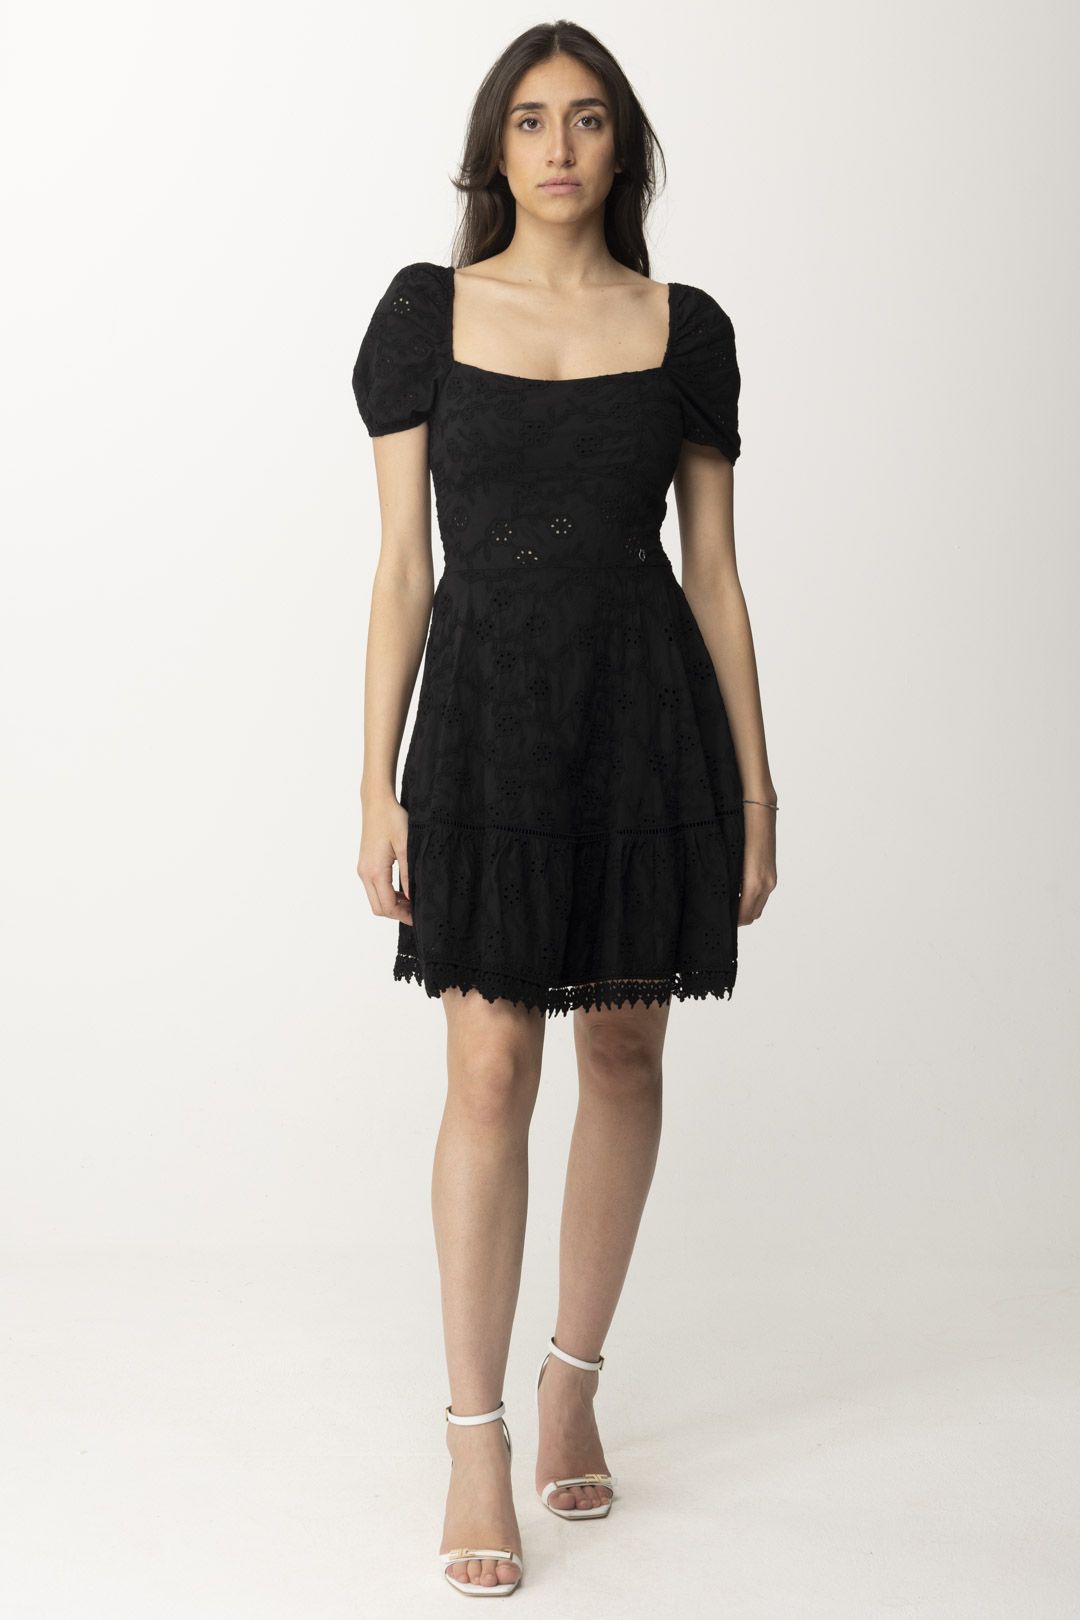 Anteprima: Guess Mini dress in sangallo Jet Black A996